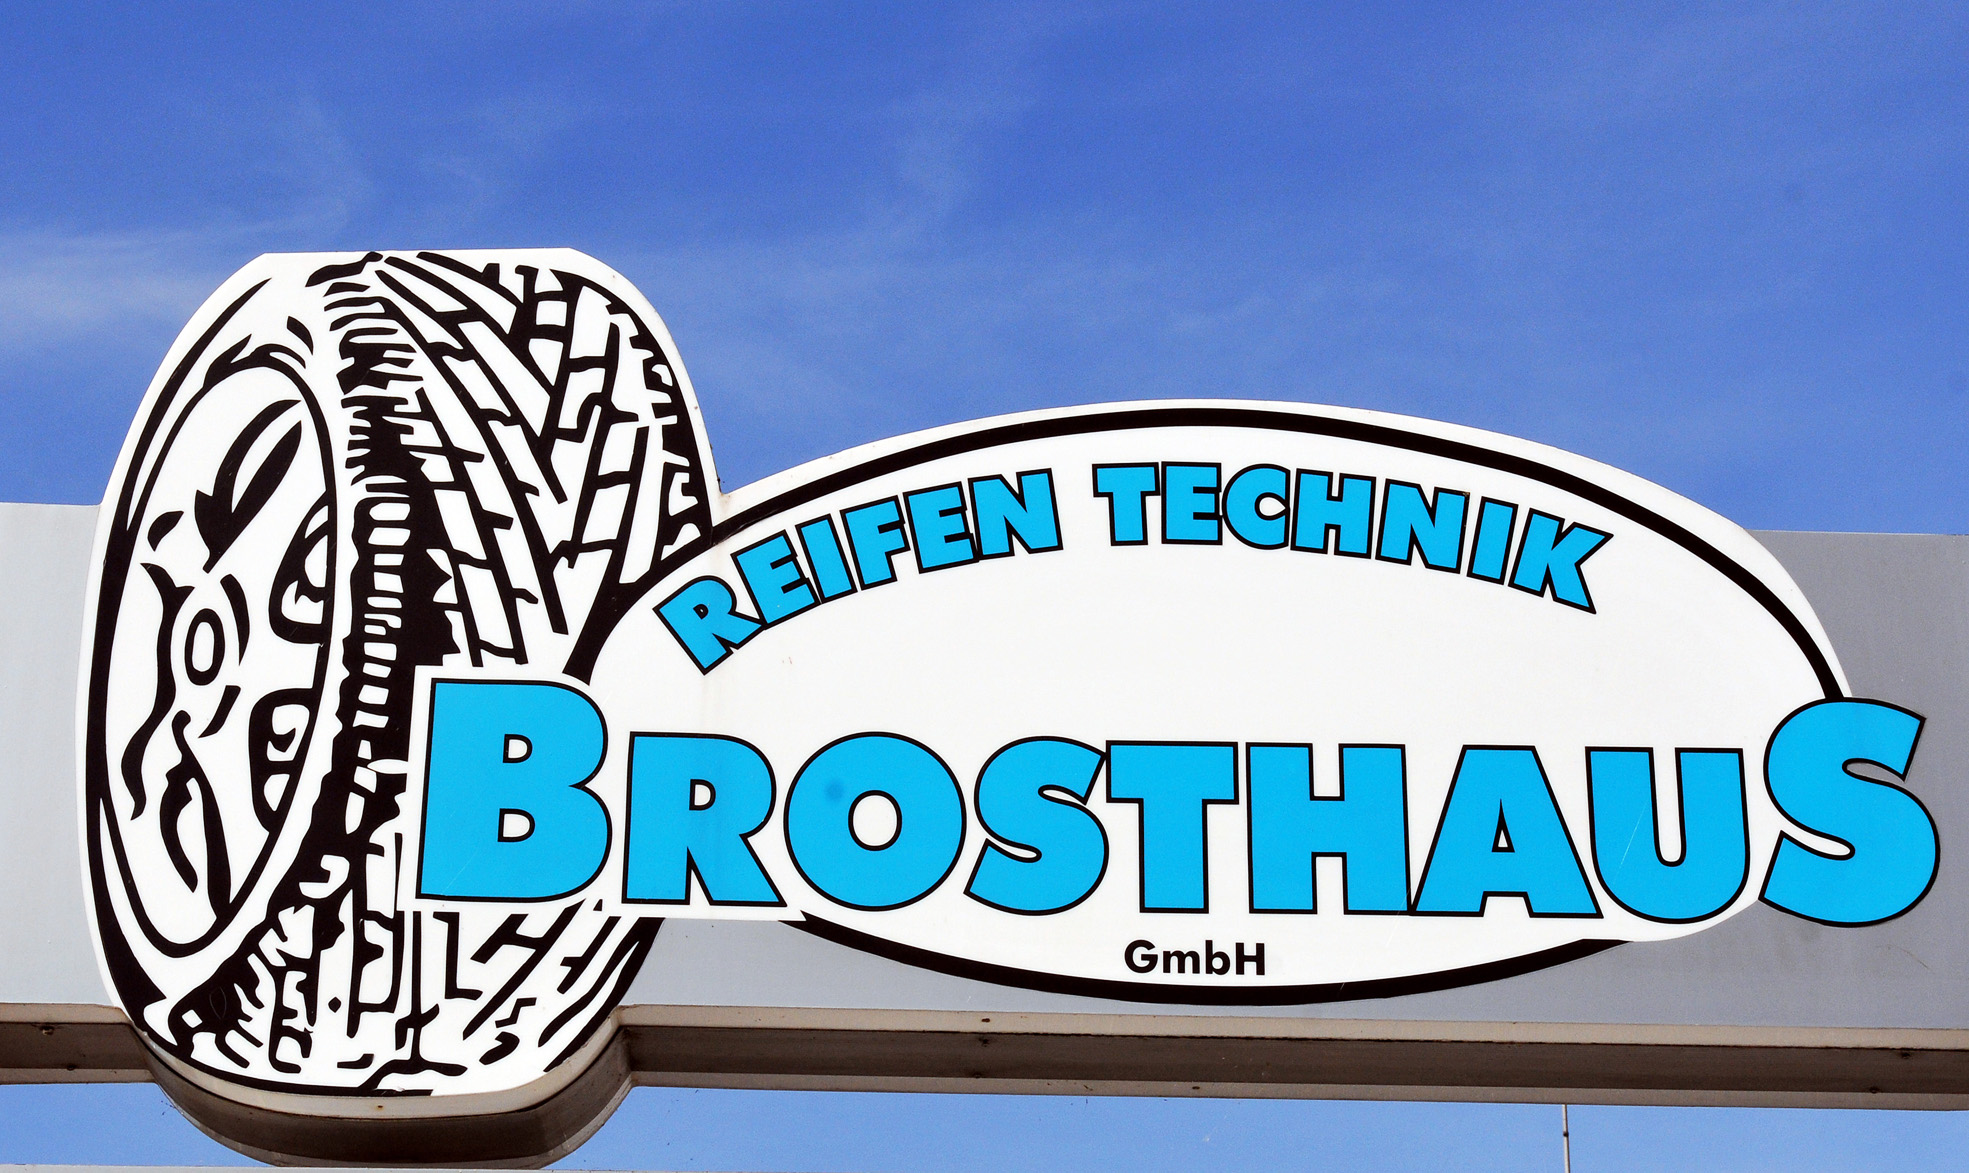 ReifenTechnik Brosthaus GmbH logo